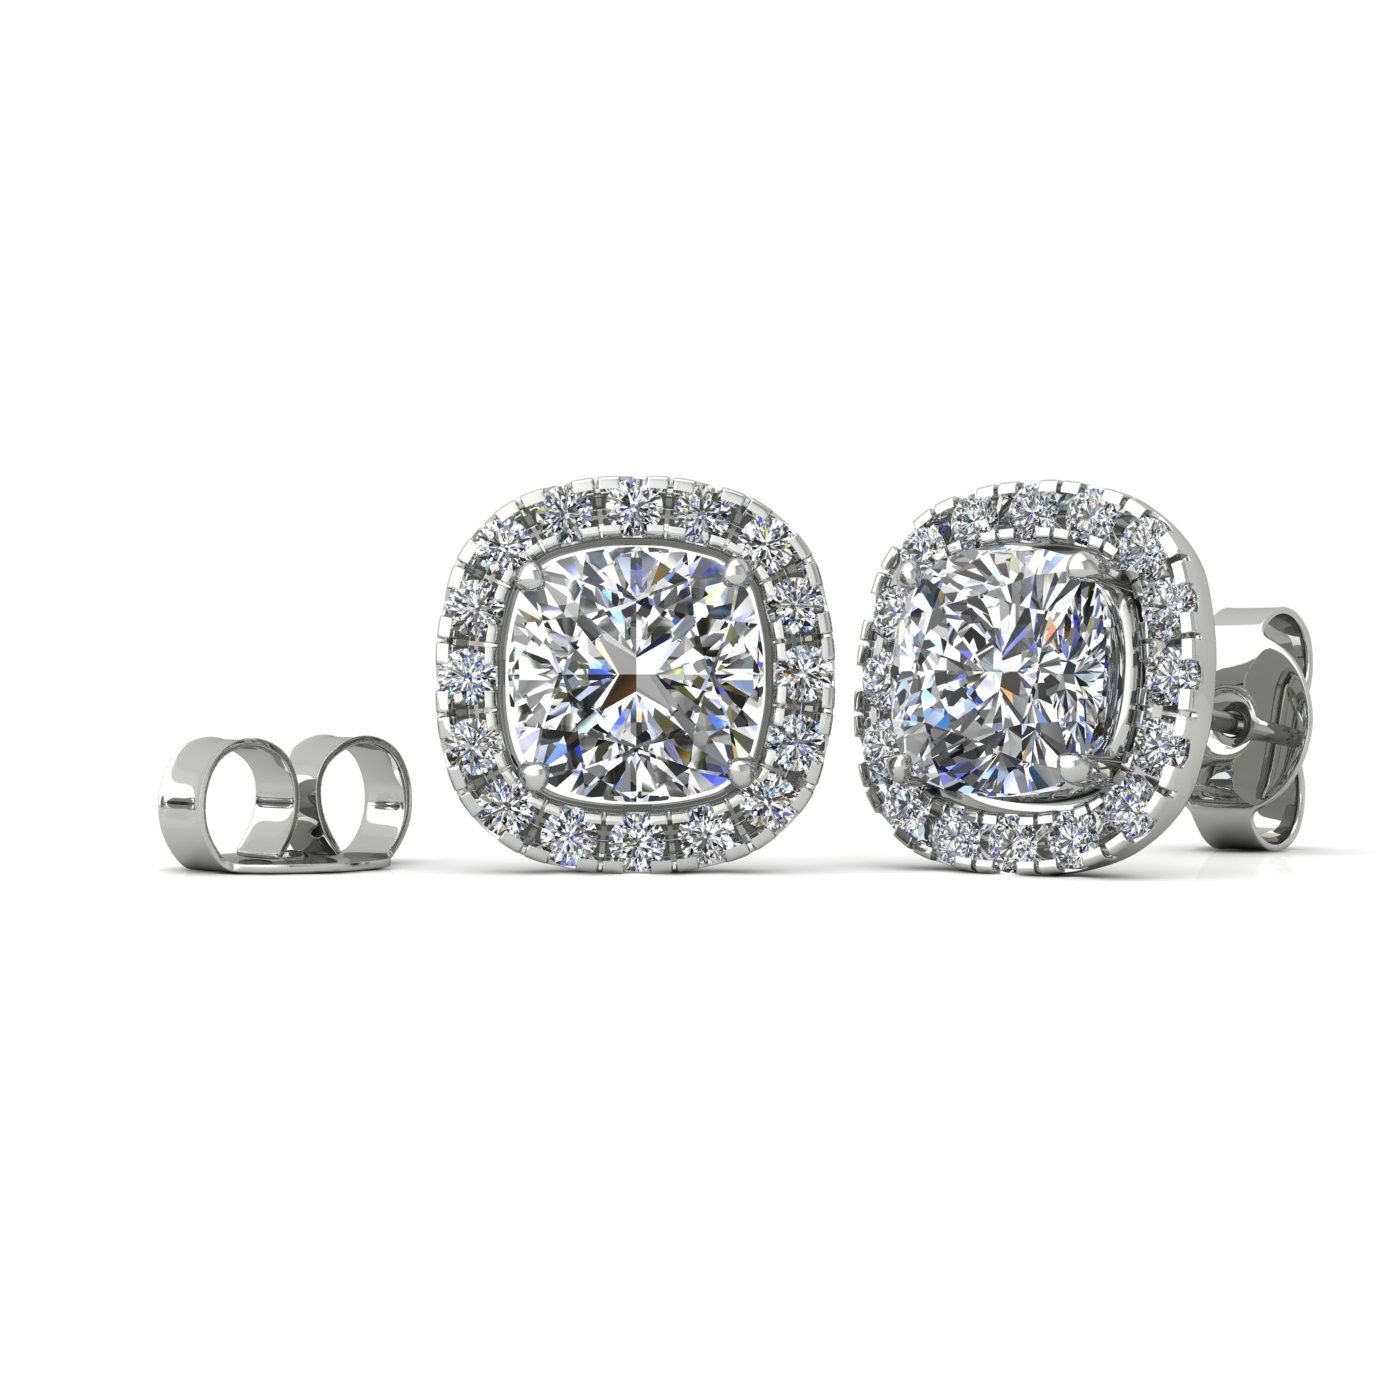 18k white gold  2,5 ct each (5,0 tcw) 4 prongs cushion shape diamond earrings with diamond pavÉ set halo Photos & images